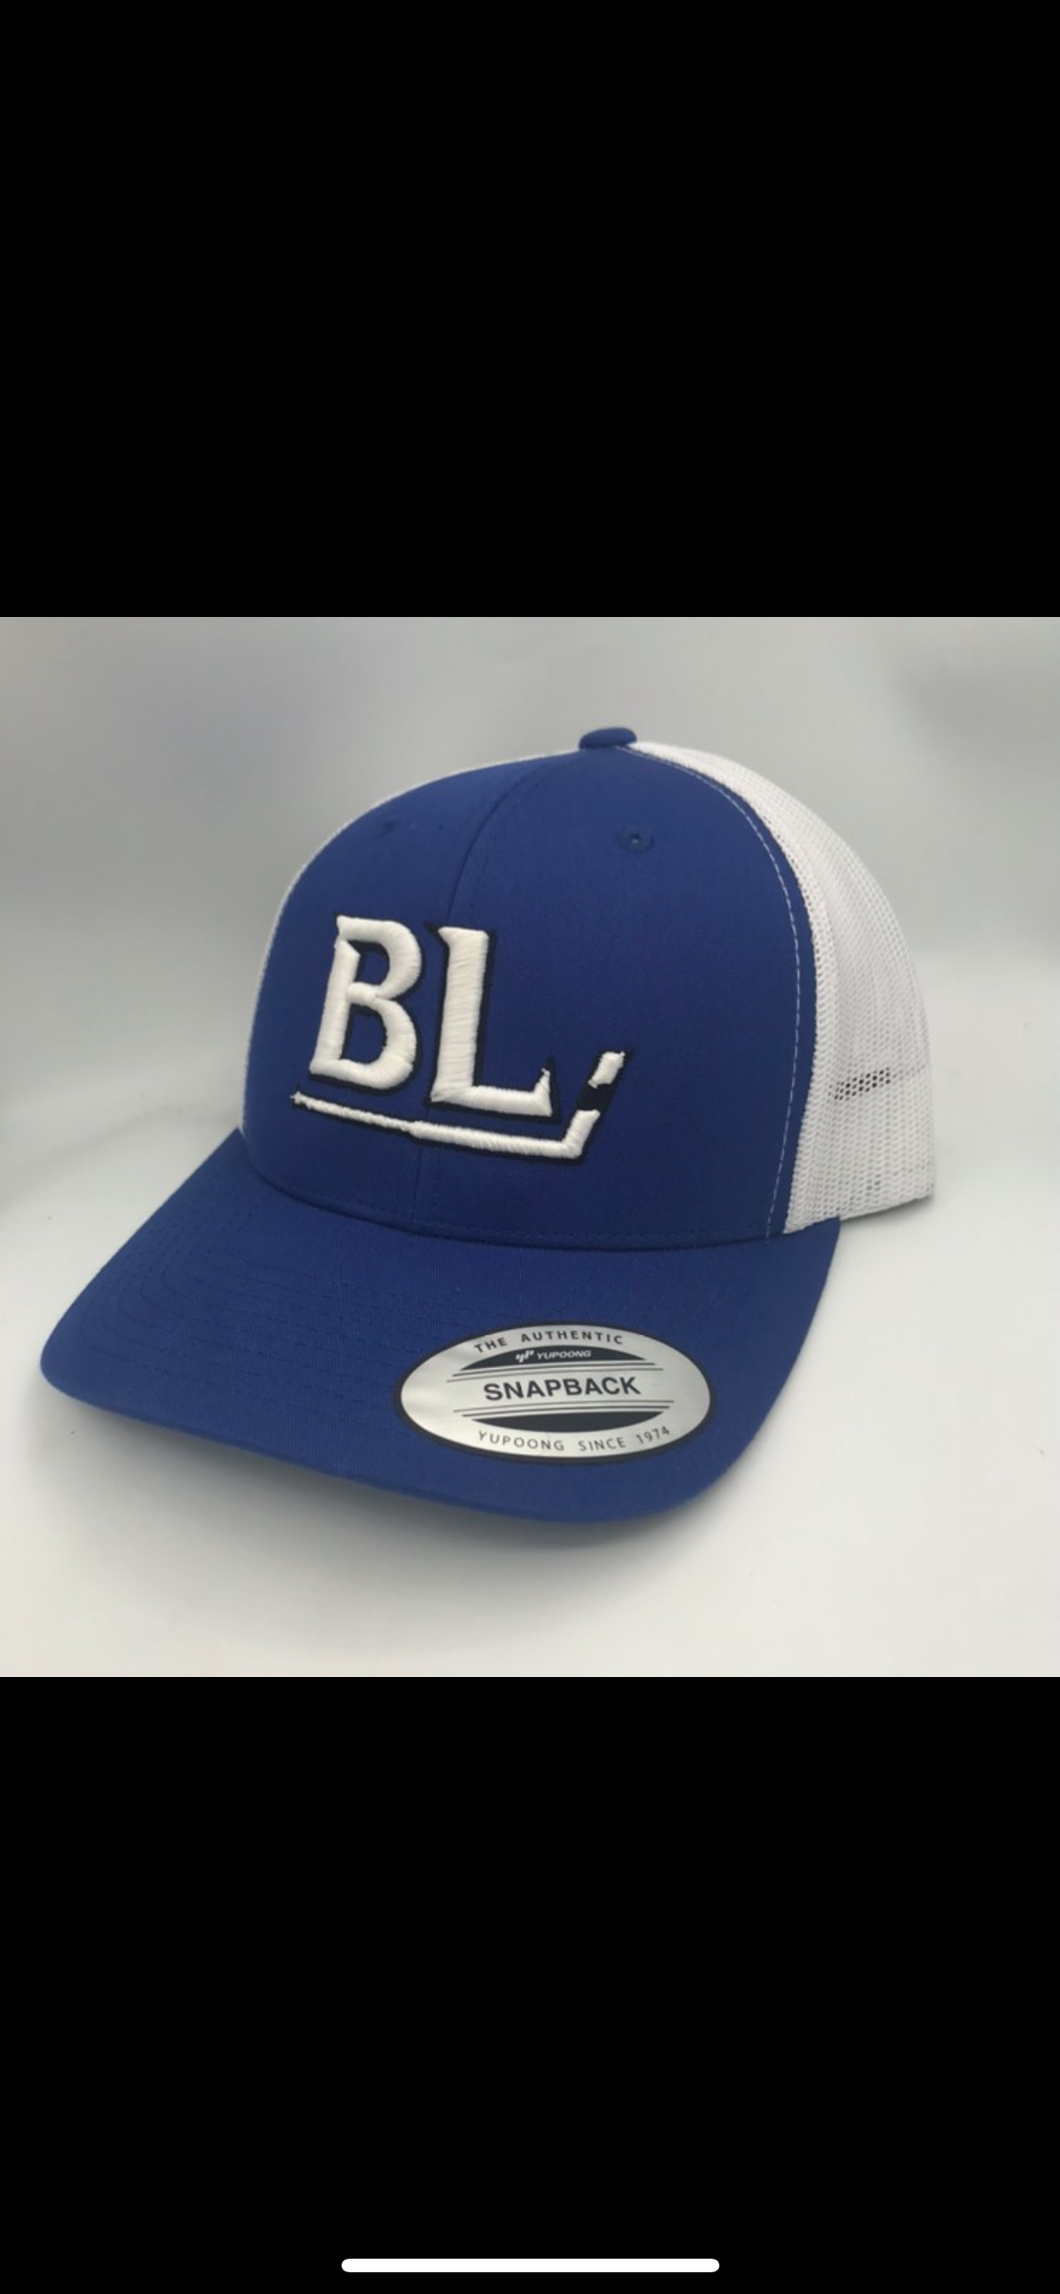 BL Blue hat